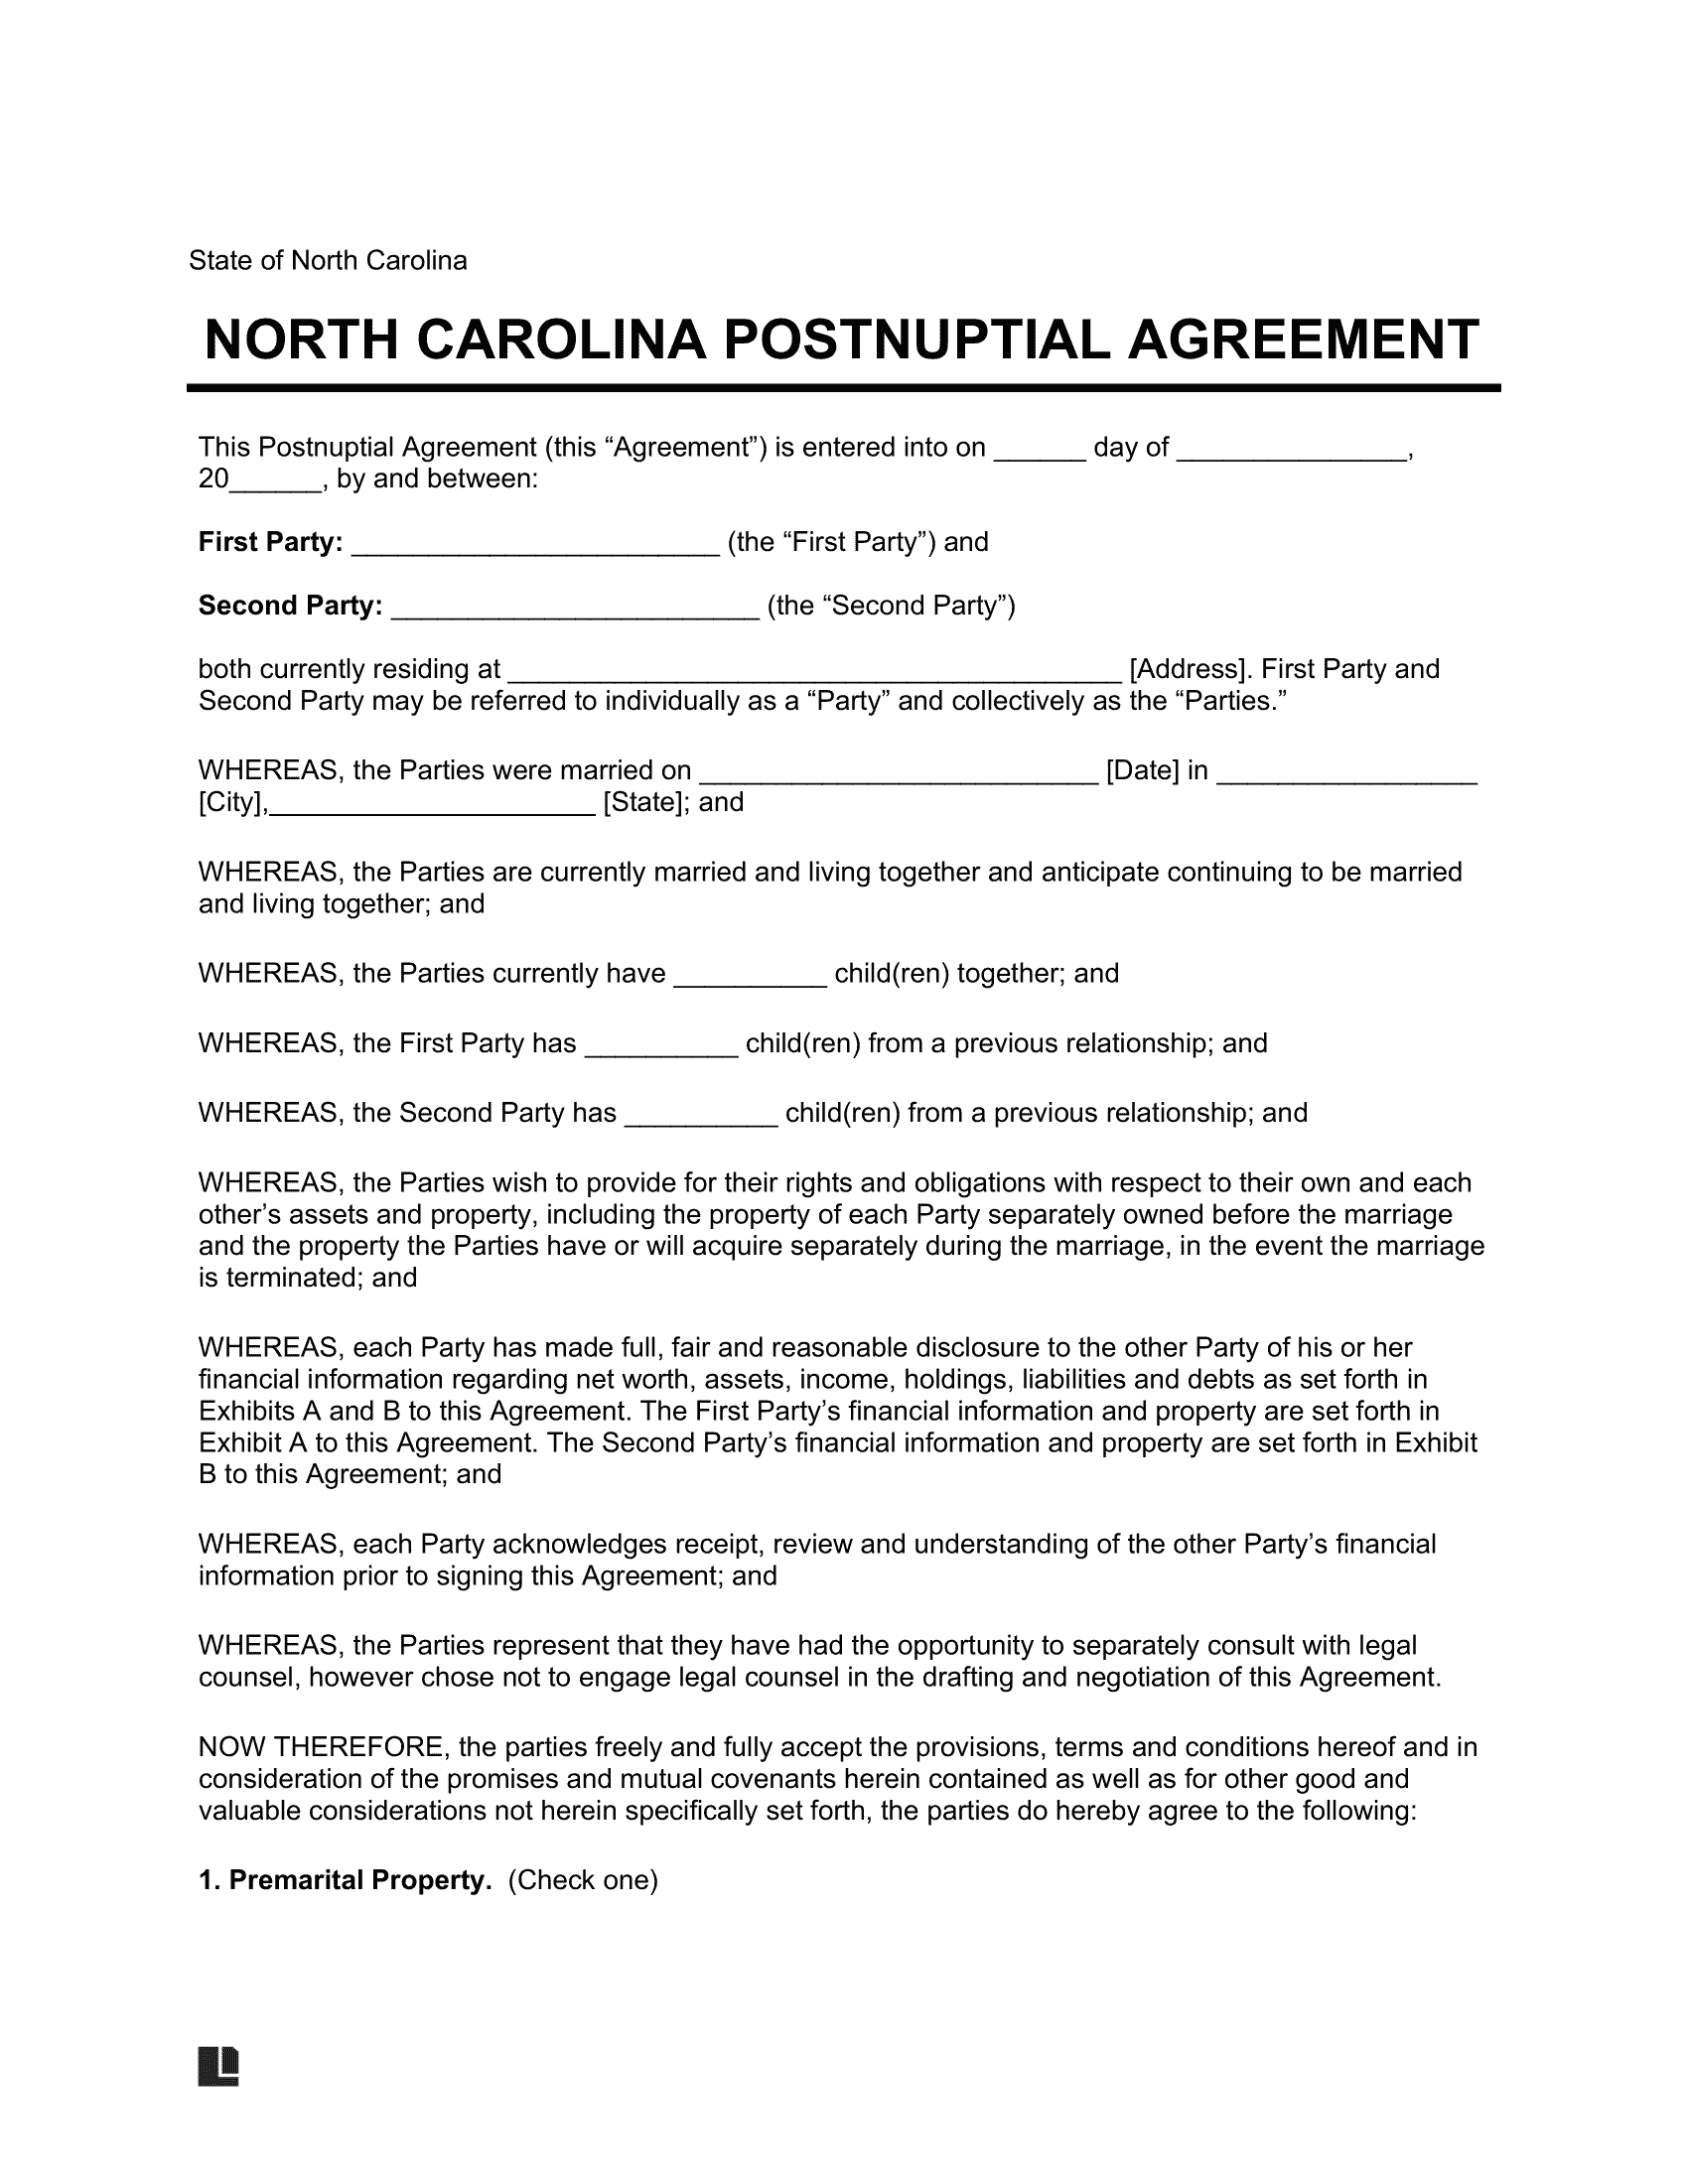 North Carolina Postnuptial Agreement Template